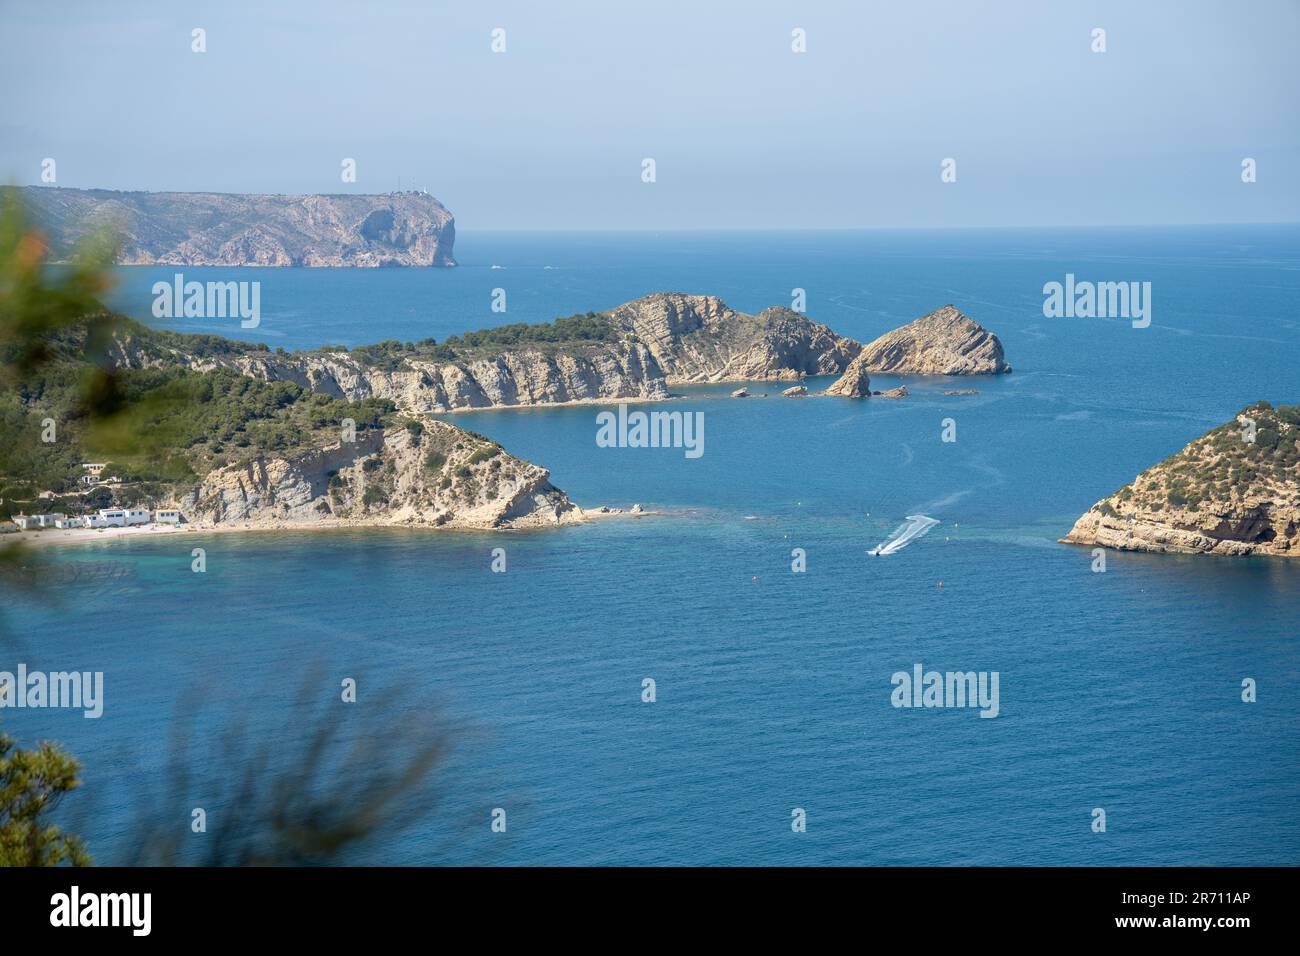 Mirador de Cap Negre with Isla del Portixol and Cap de Sant Marti in the Mediterranean, Spain Stock Photo